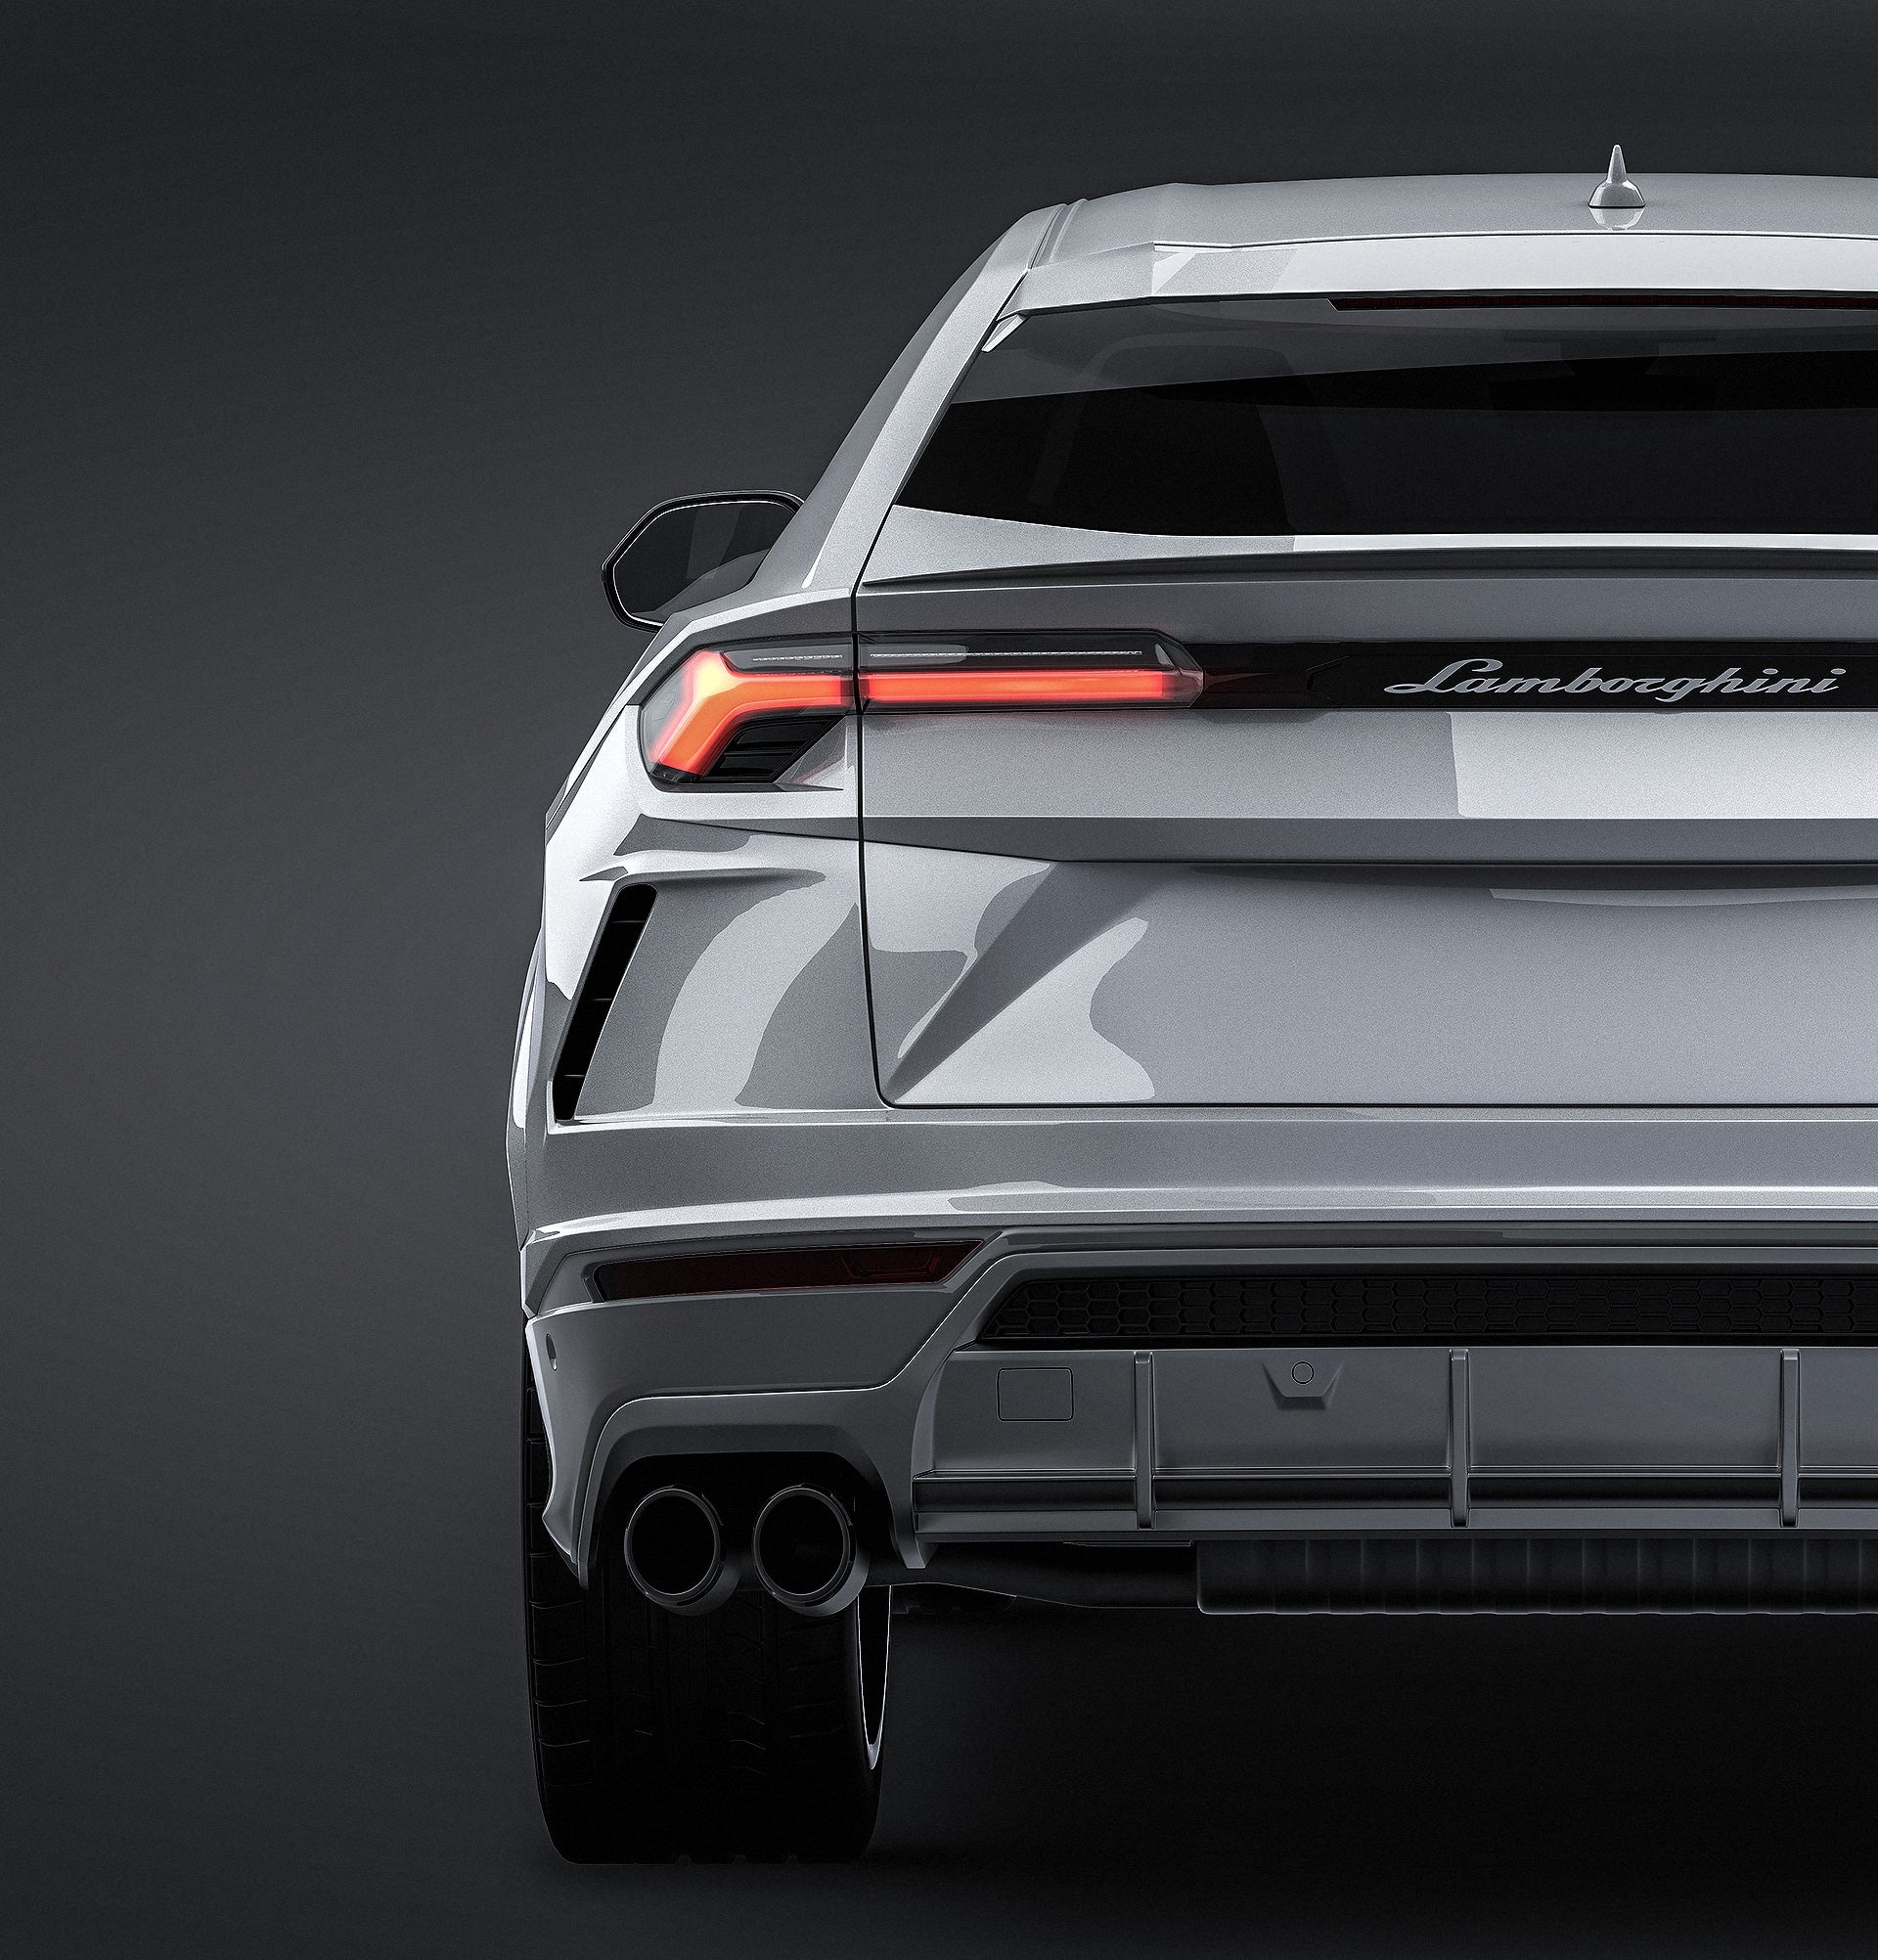 Lamborghini Urus 2019 glossy finish - all sides Car Mockup Template.psd